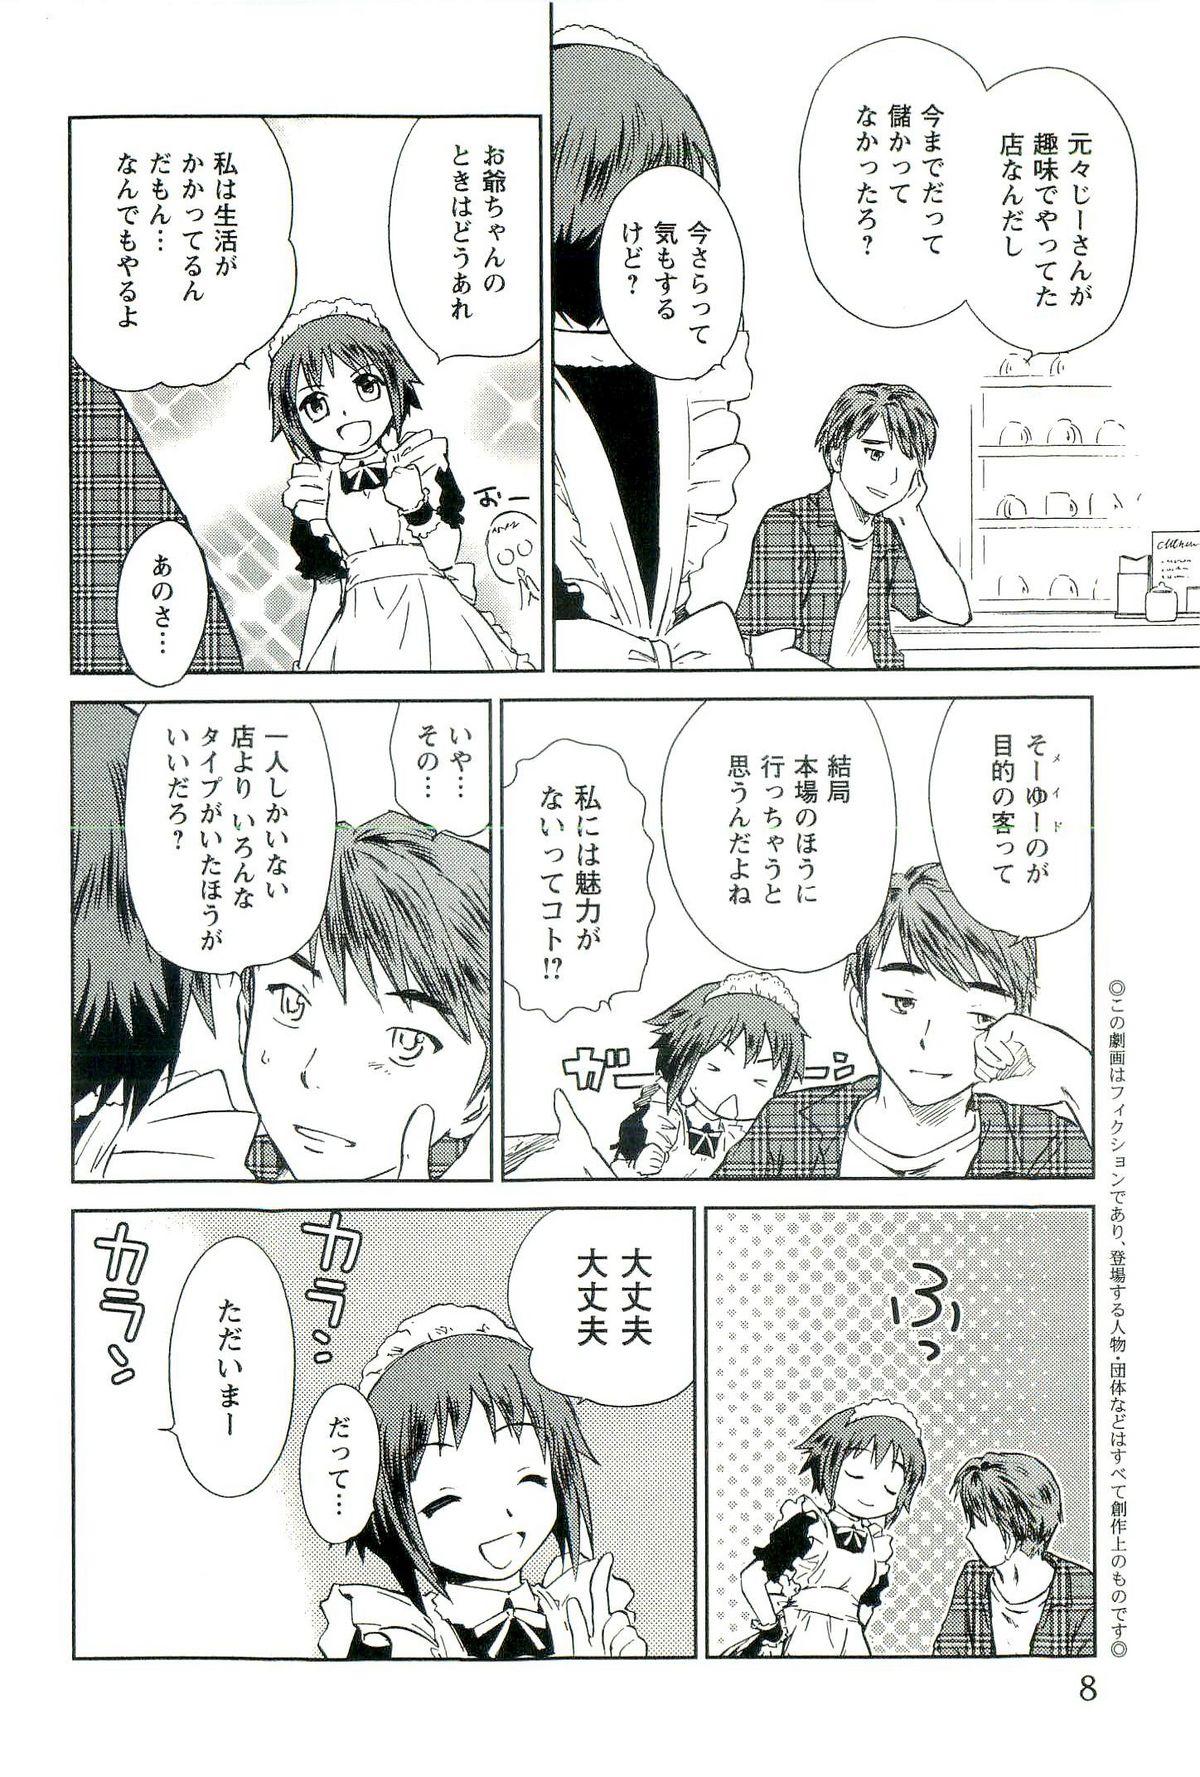 Sola Romance Jigoku - An Abyss of Romance Publico - Page 9